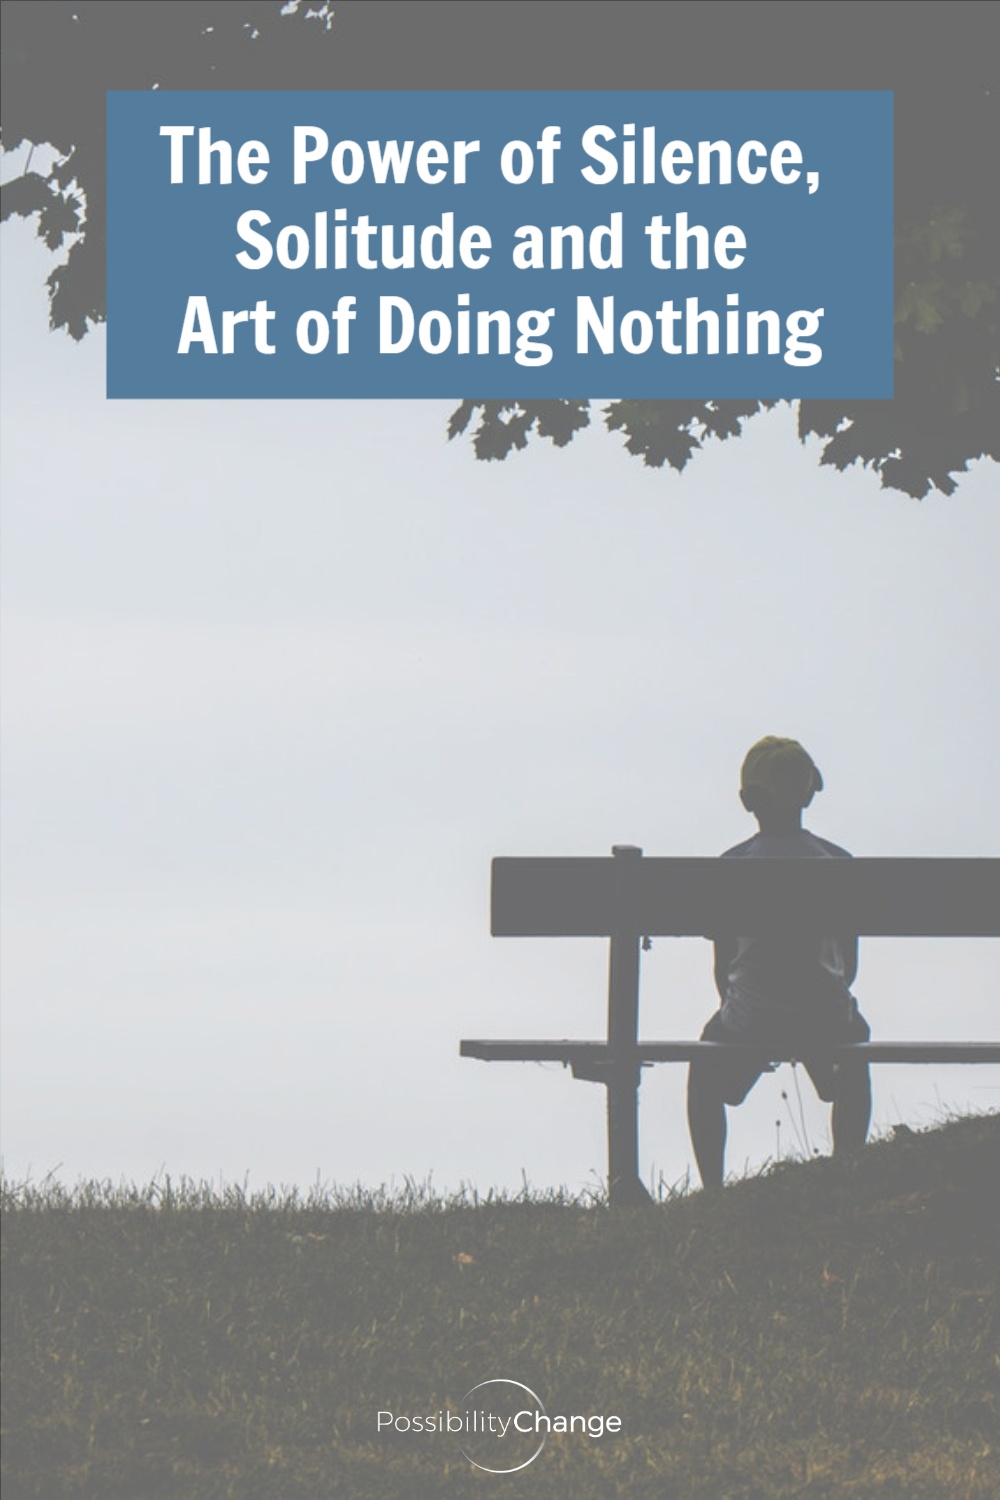 Art of Doing Nothing